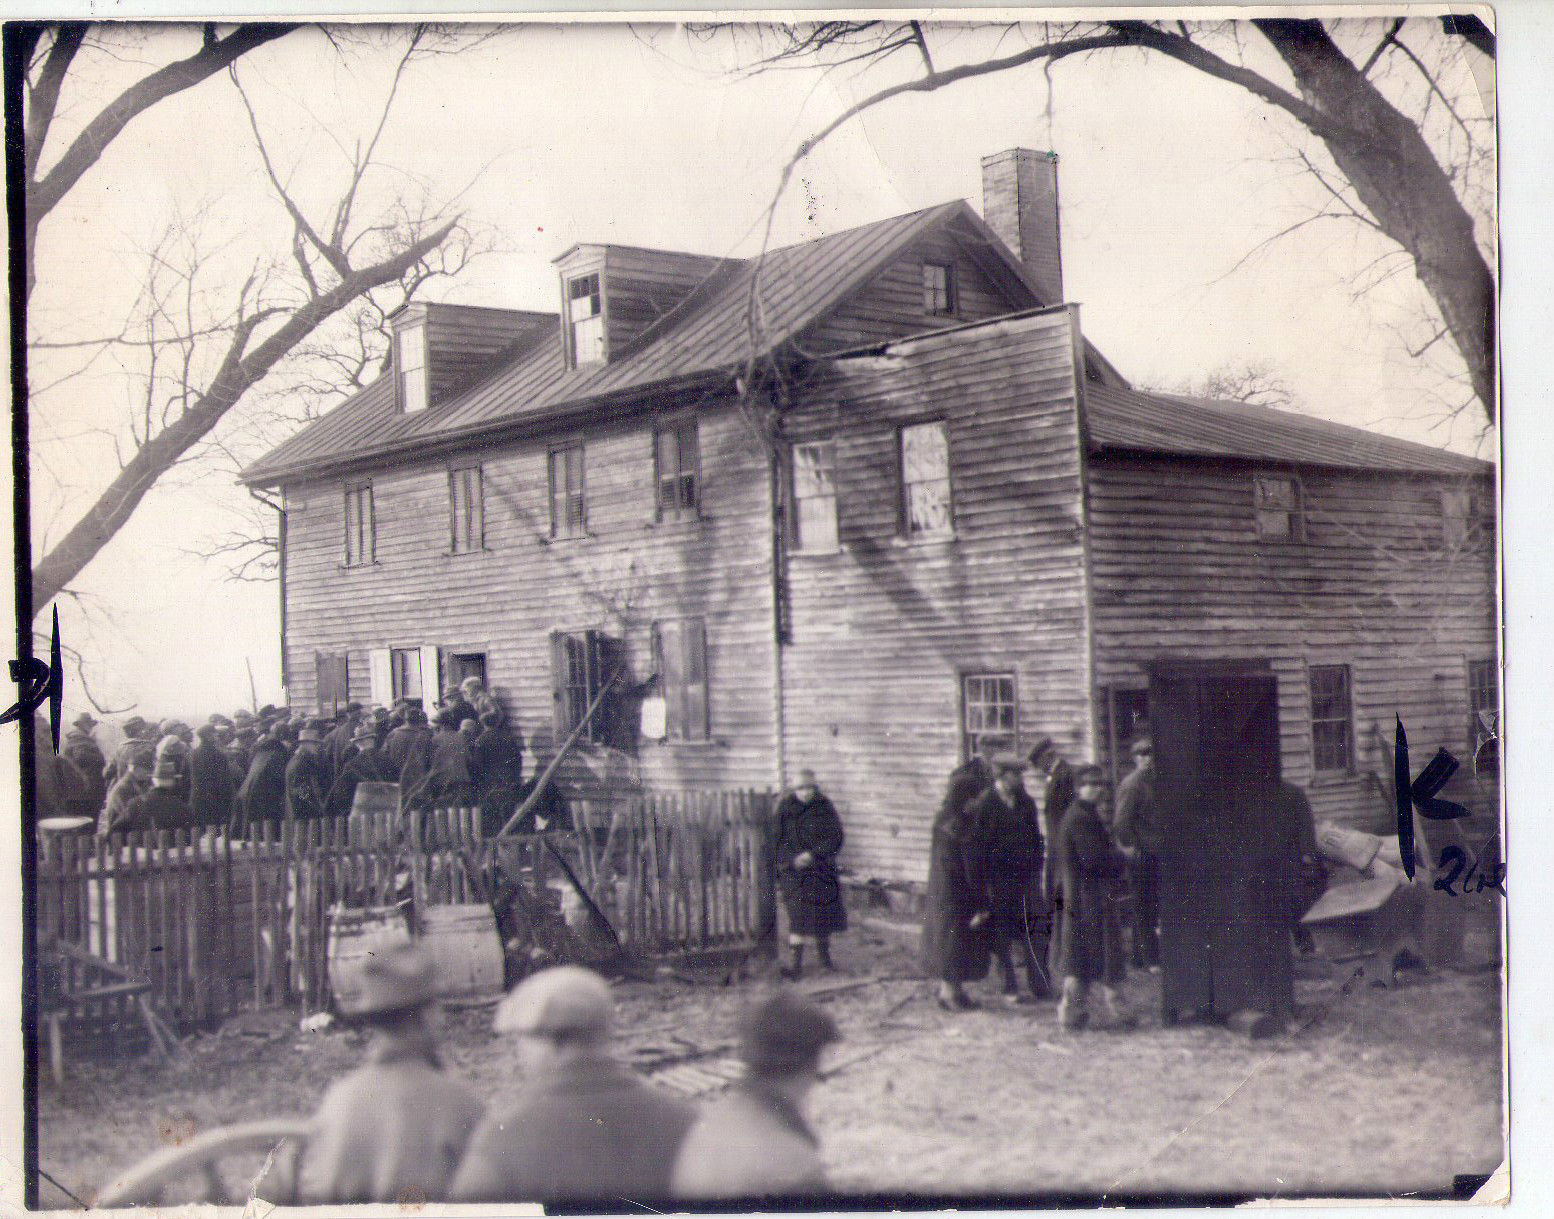 Browns Mills - William seeds residence Pemberton,NJ near browns mills 1928 - front